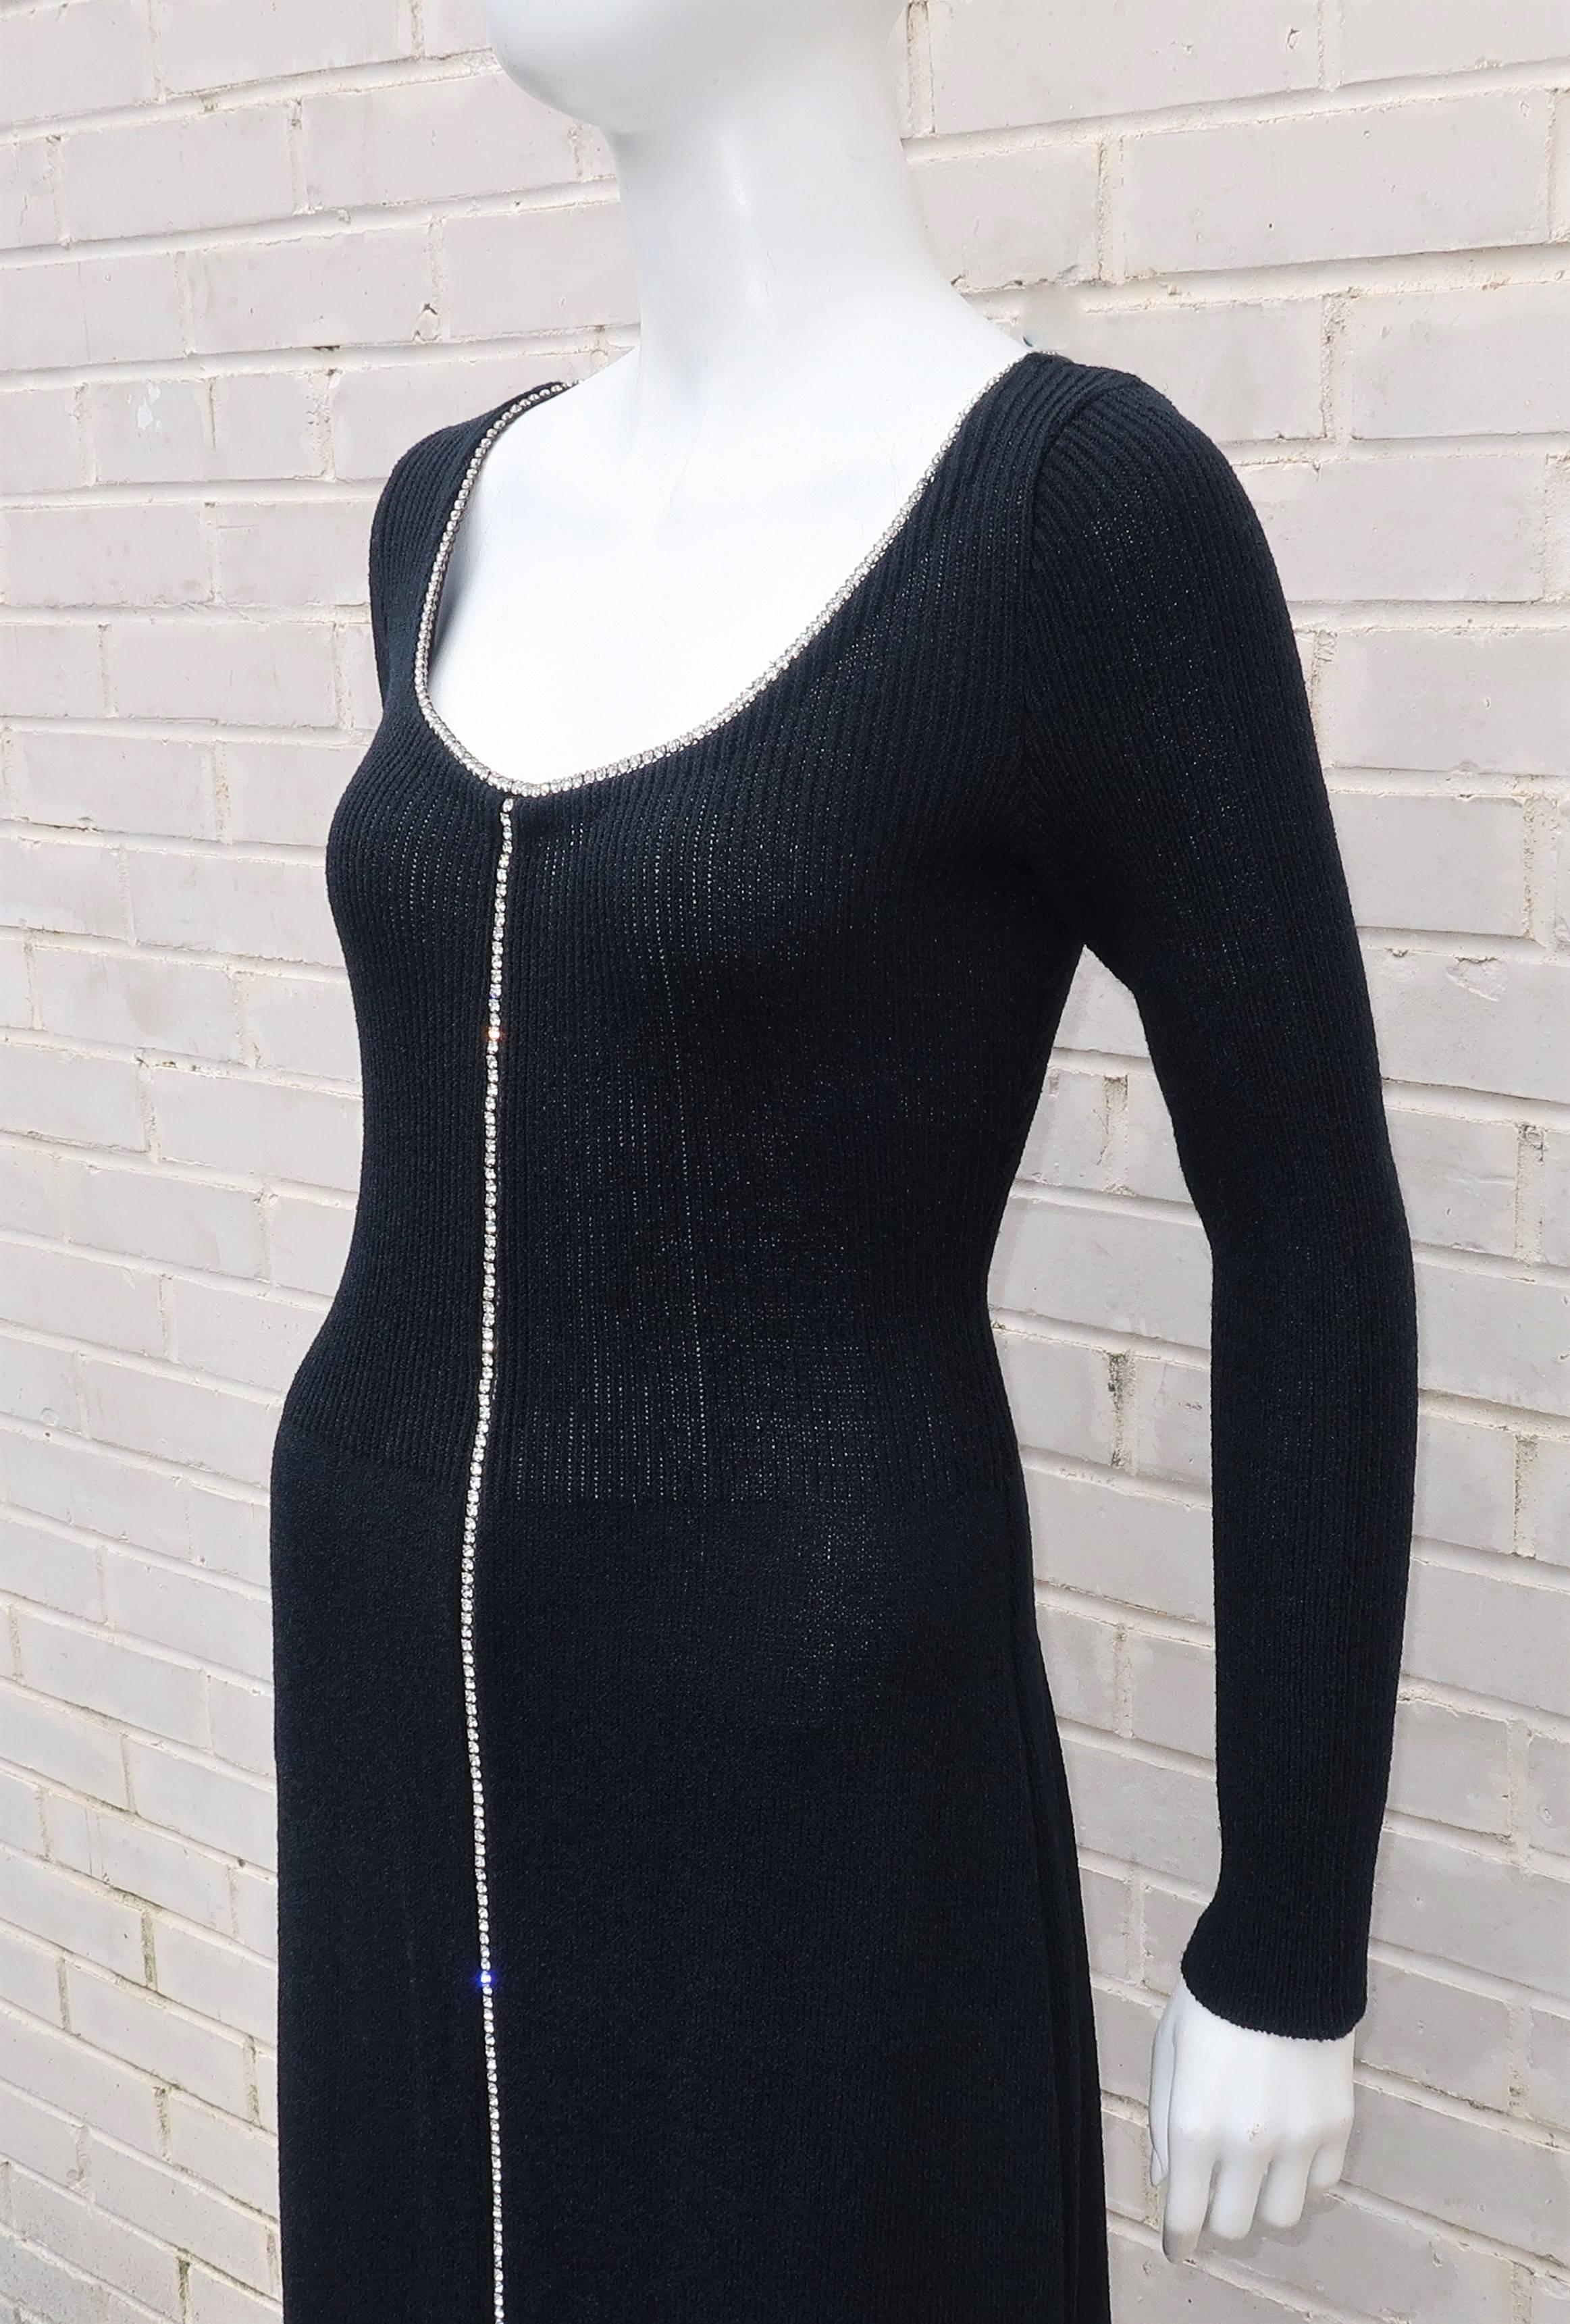 1970’s Silhouette Black Knit Dress With Rhinestones 1